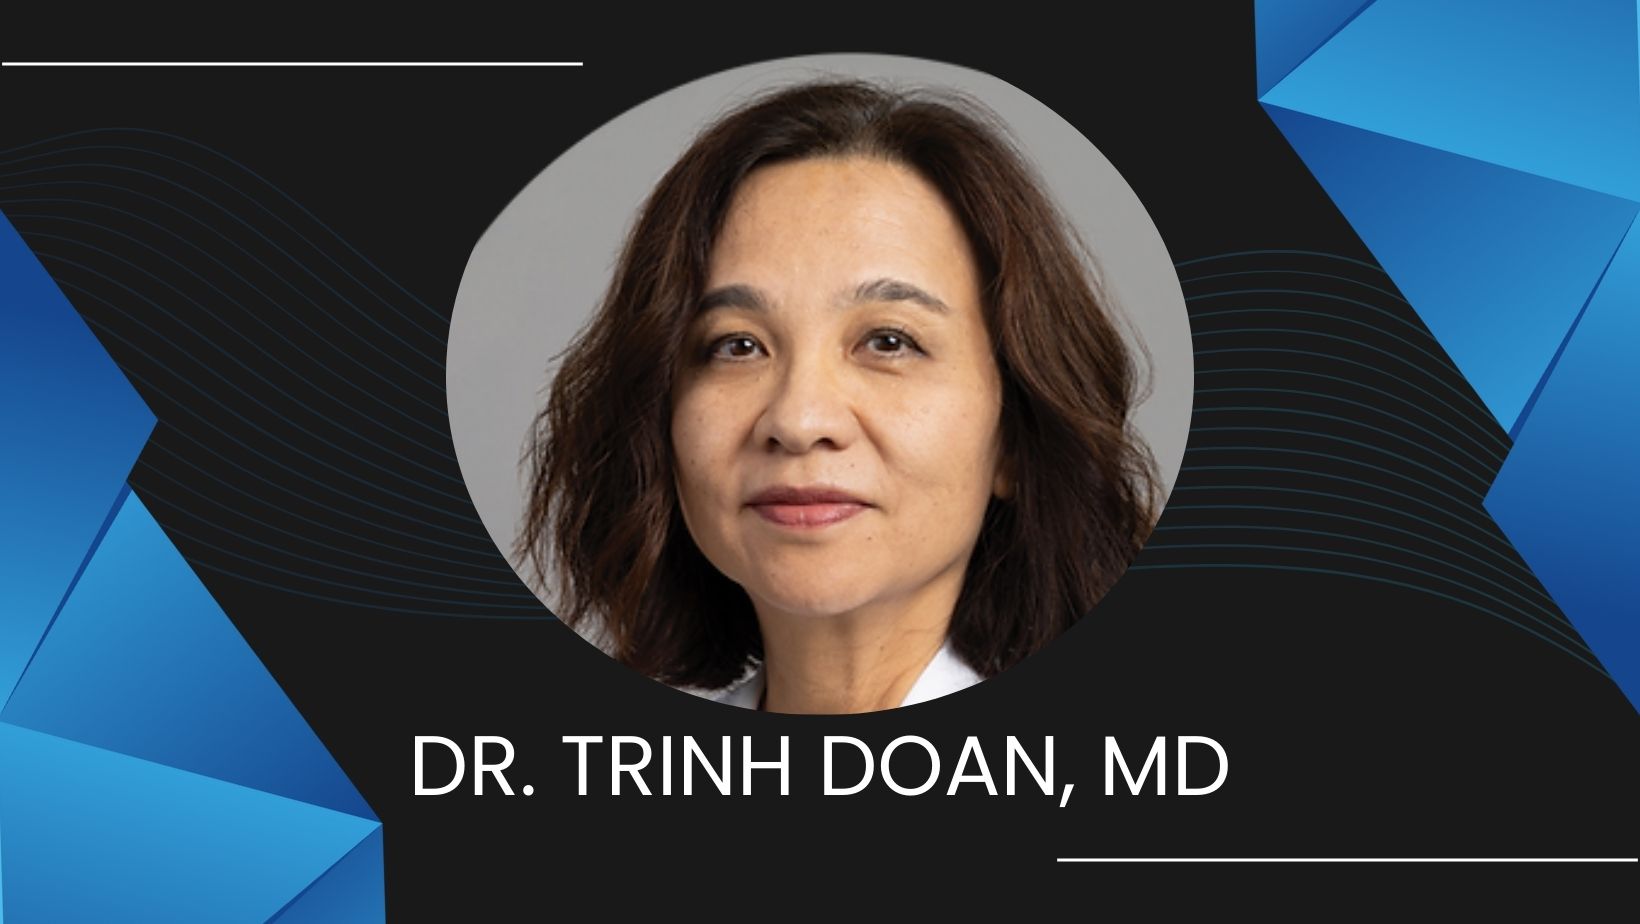 Dr. Trinh Doan